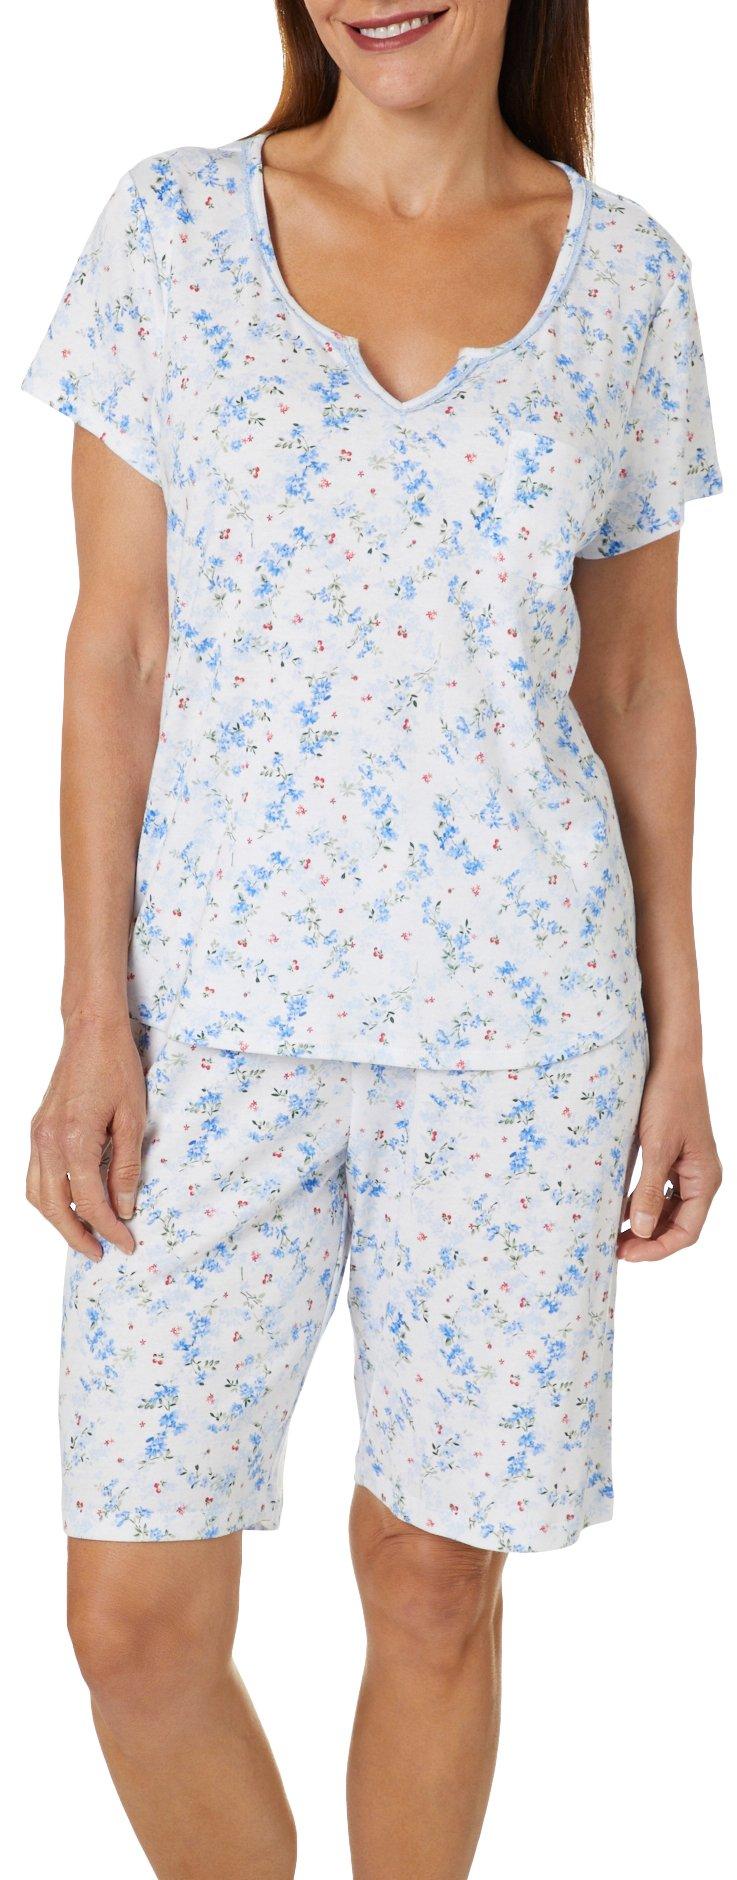 Women's Pajama Sets | Sleepwear Sets | Bealls Florida